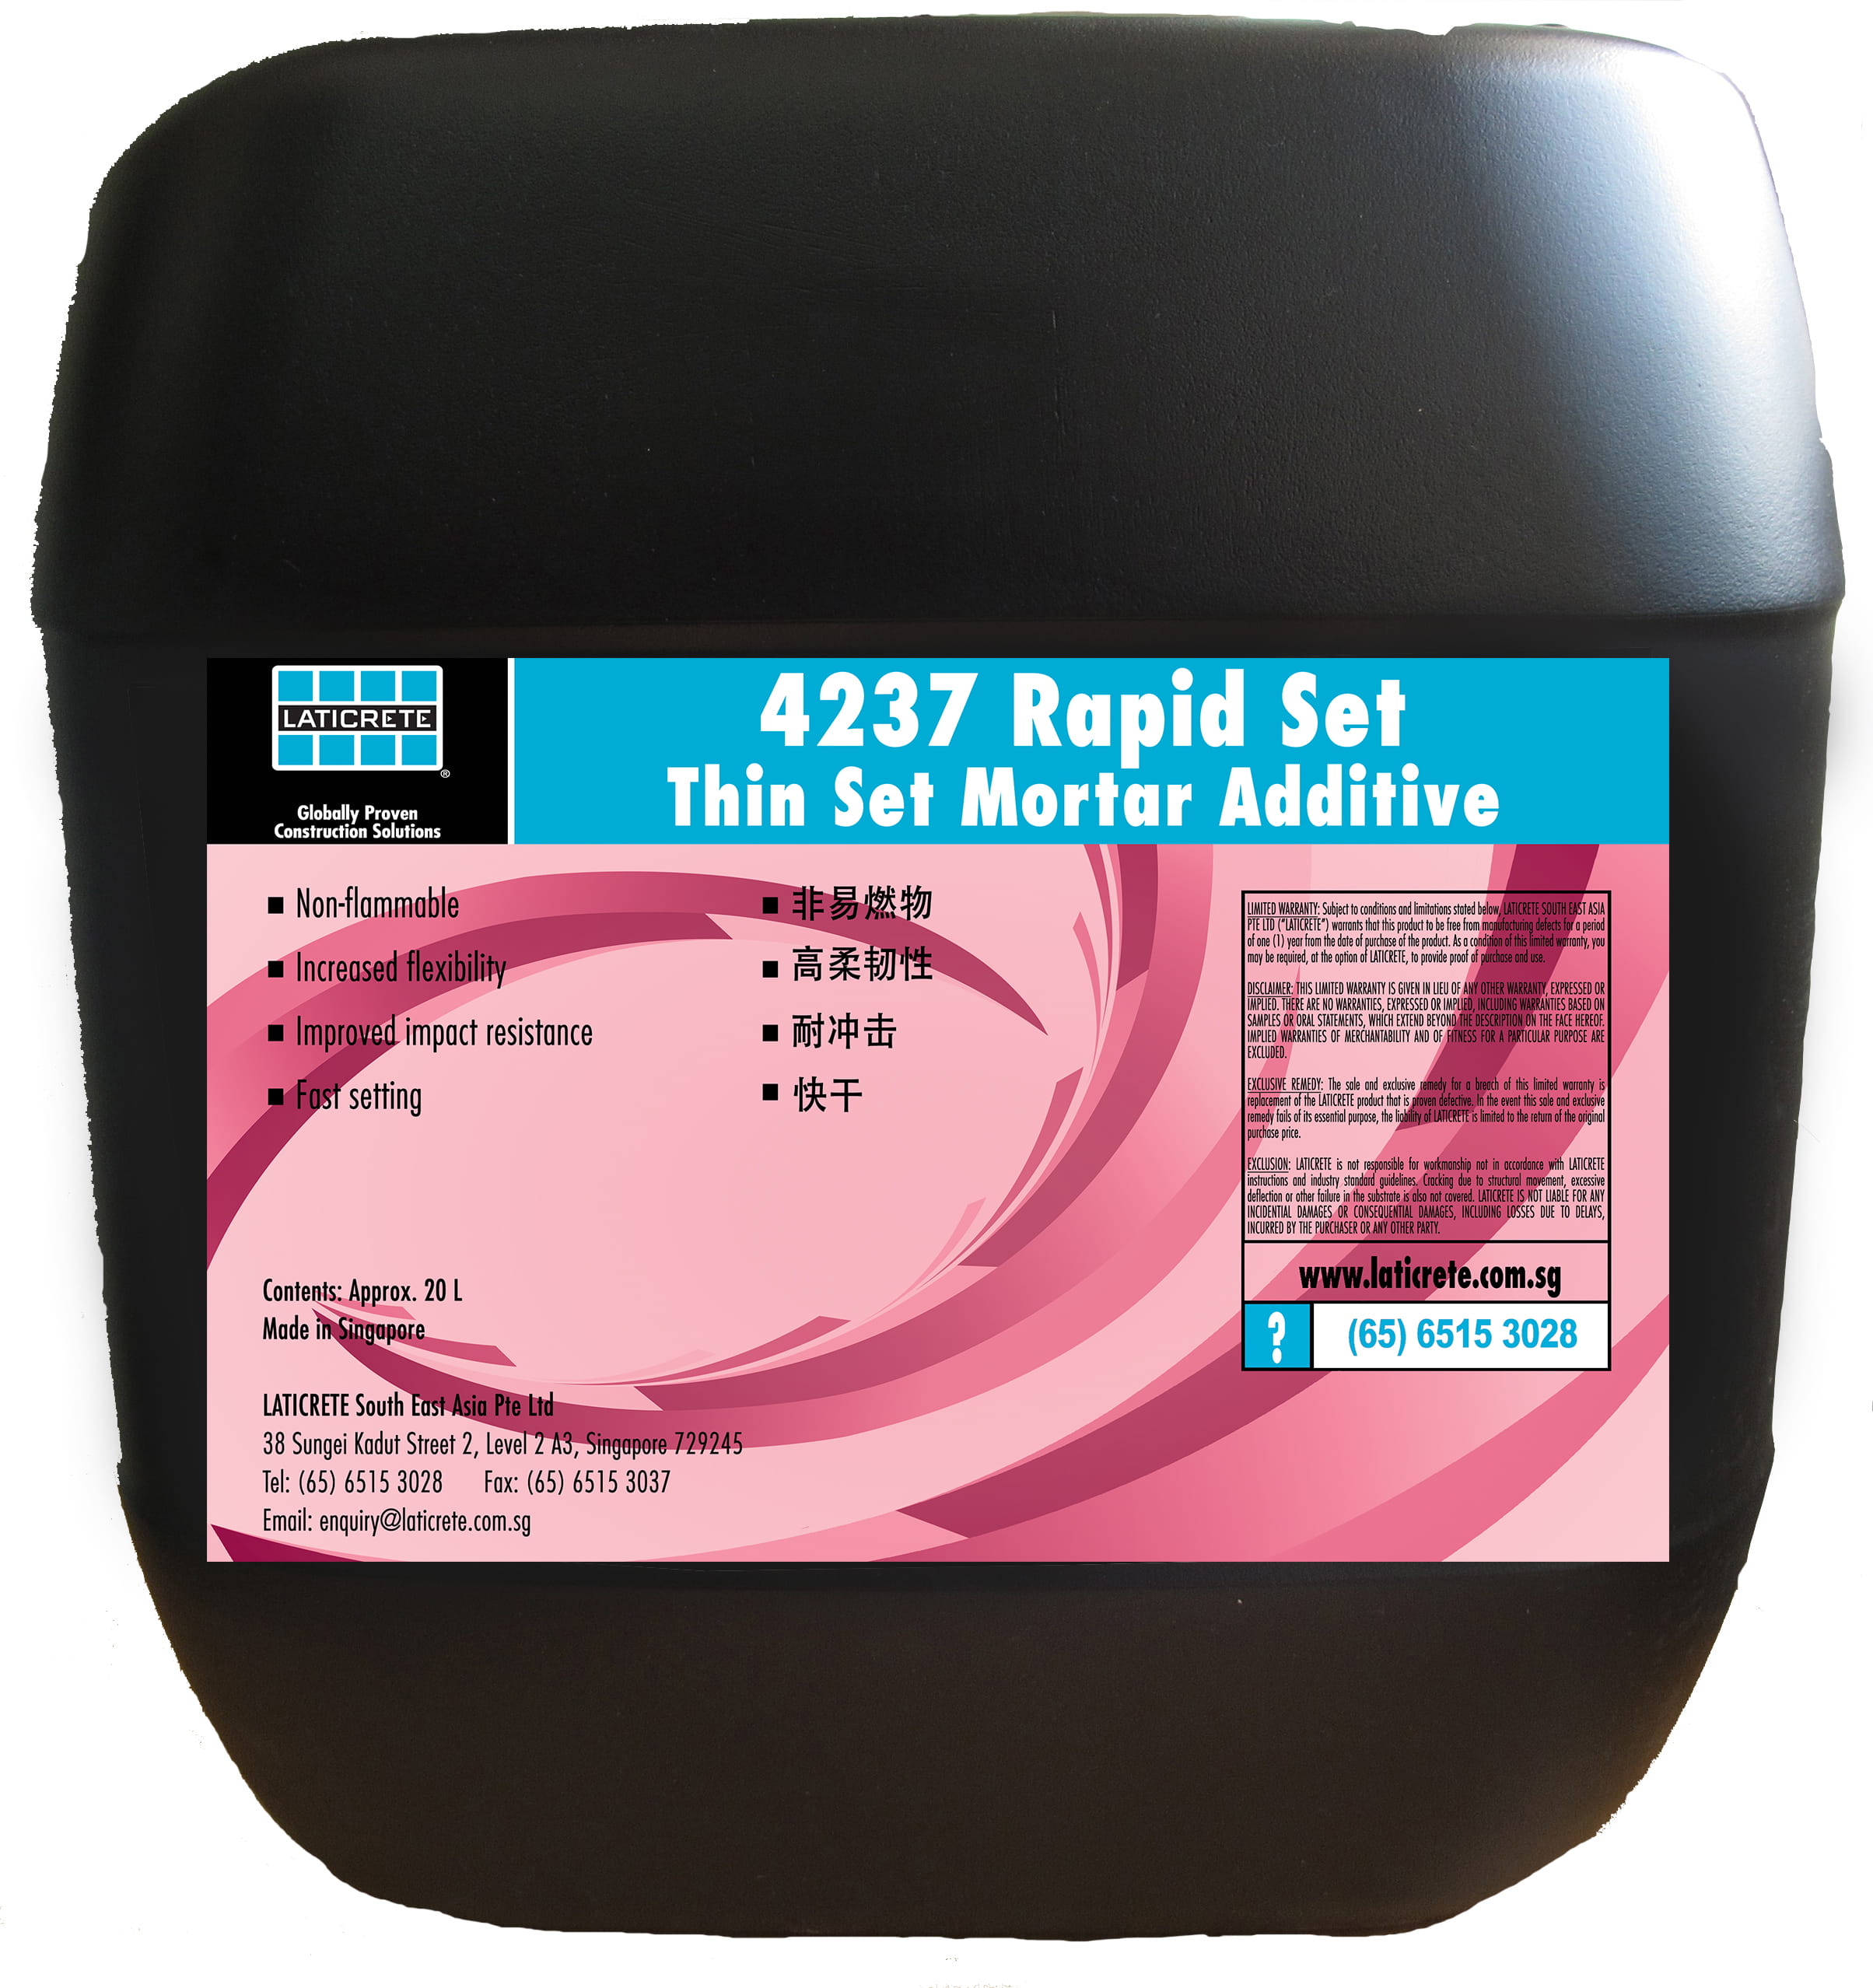 4237 Rapid Set Thin Set Mortar Additive